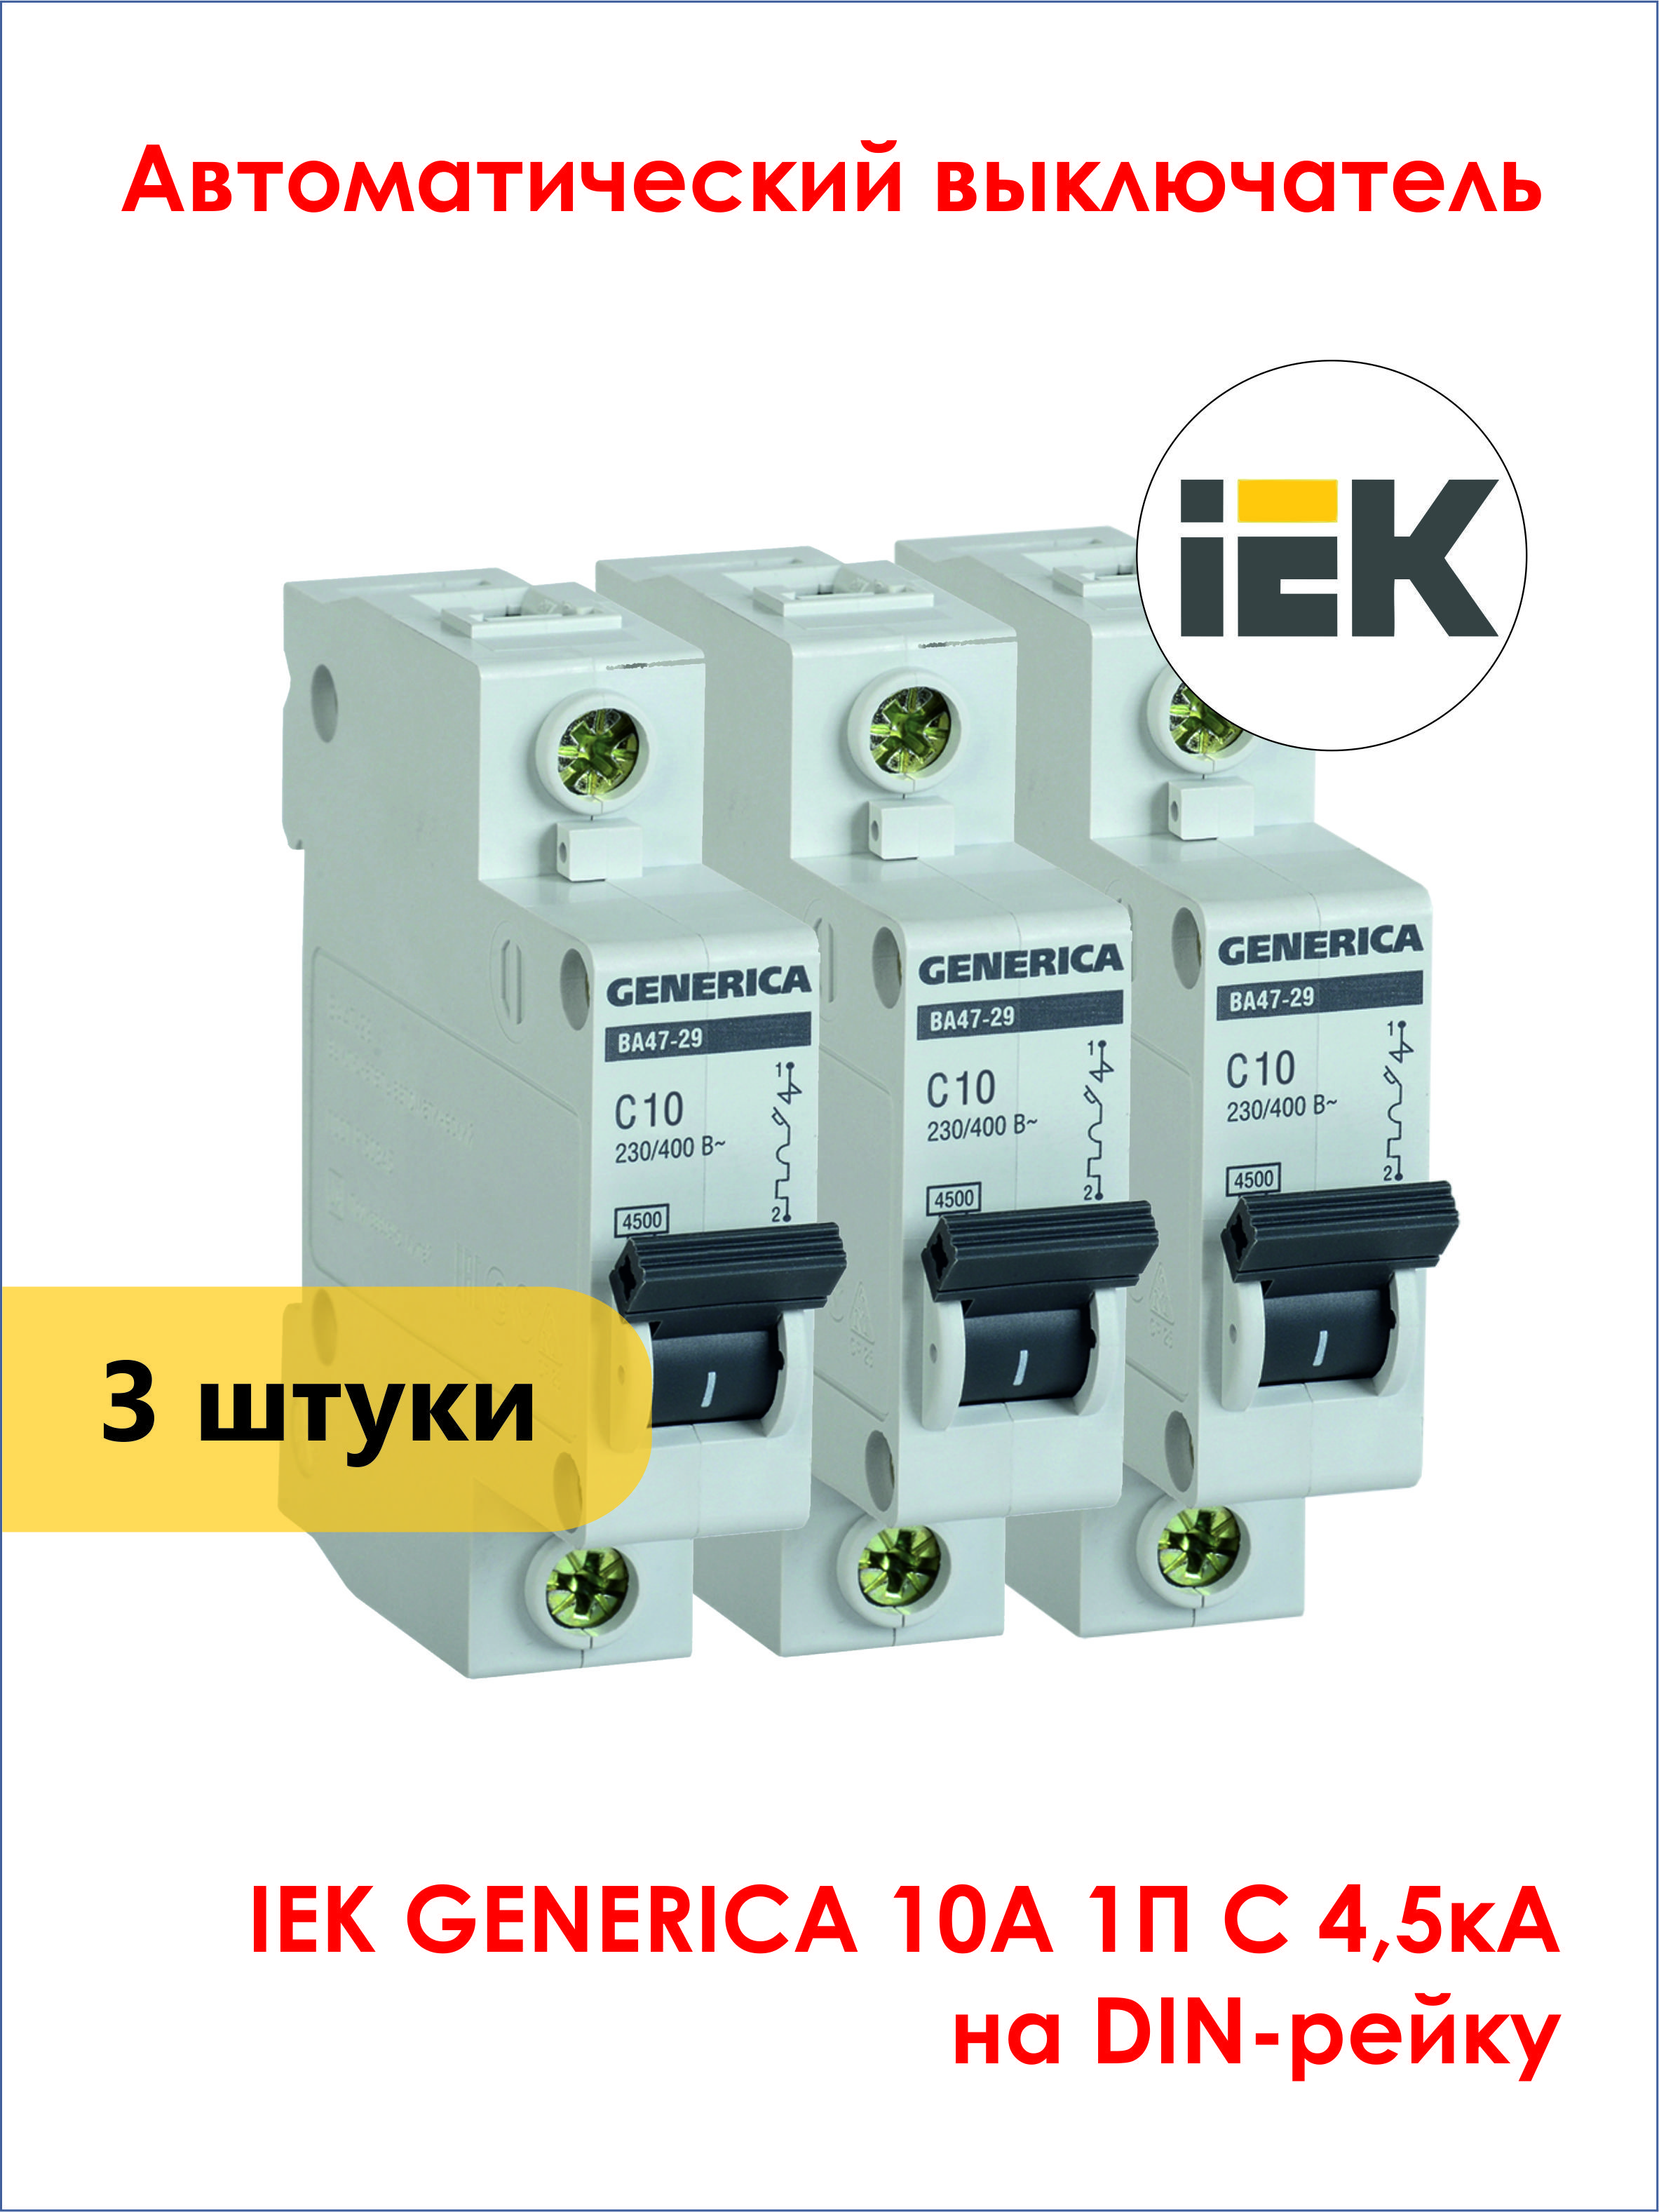 Автоматический выключатель generica. Ва47-29 1р 10а 4,5ка х-ка. IEK generica ва47-29 1p 25а 4,5ка х-ка с mva25-1-025-c. Авт. Выкл. Ва47-29 4,5ка х-ка с generica.